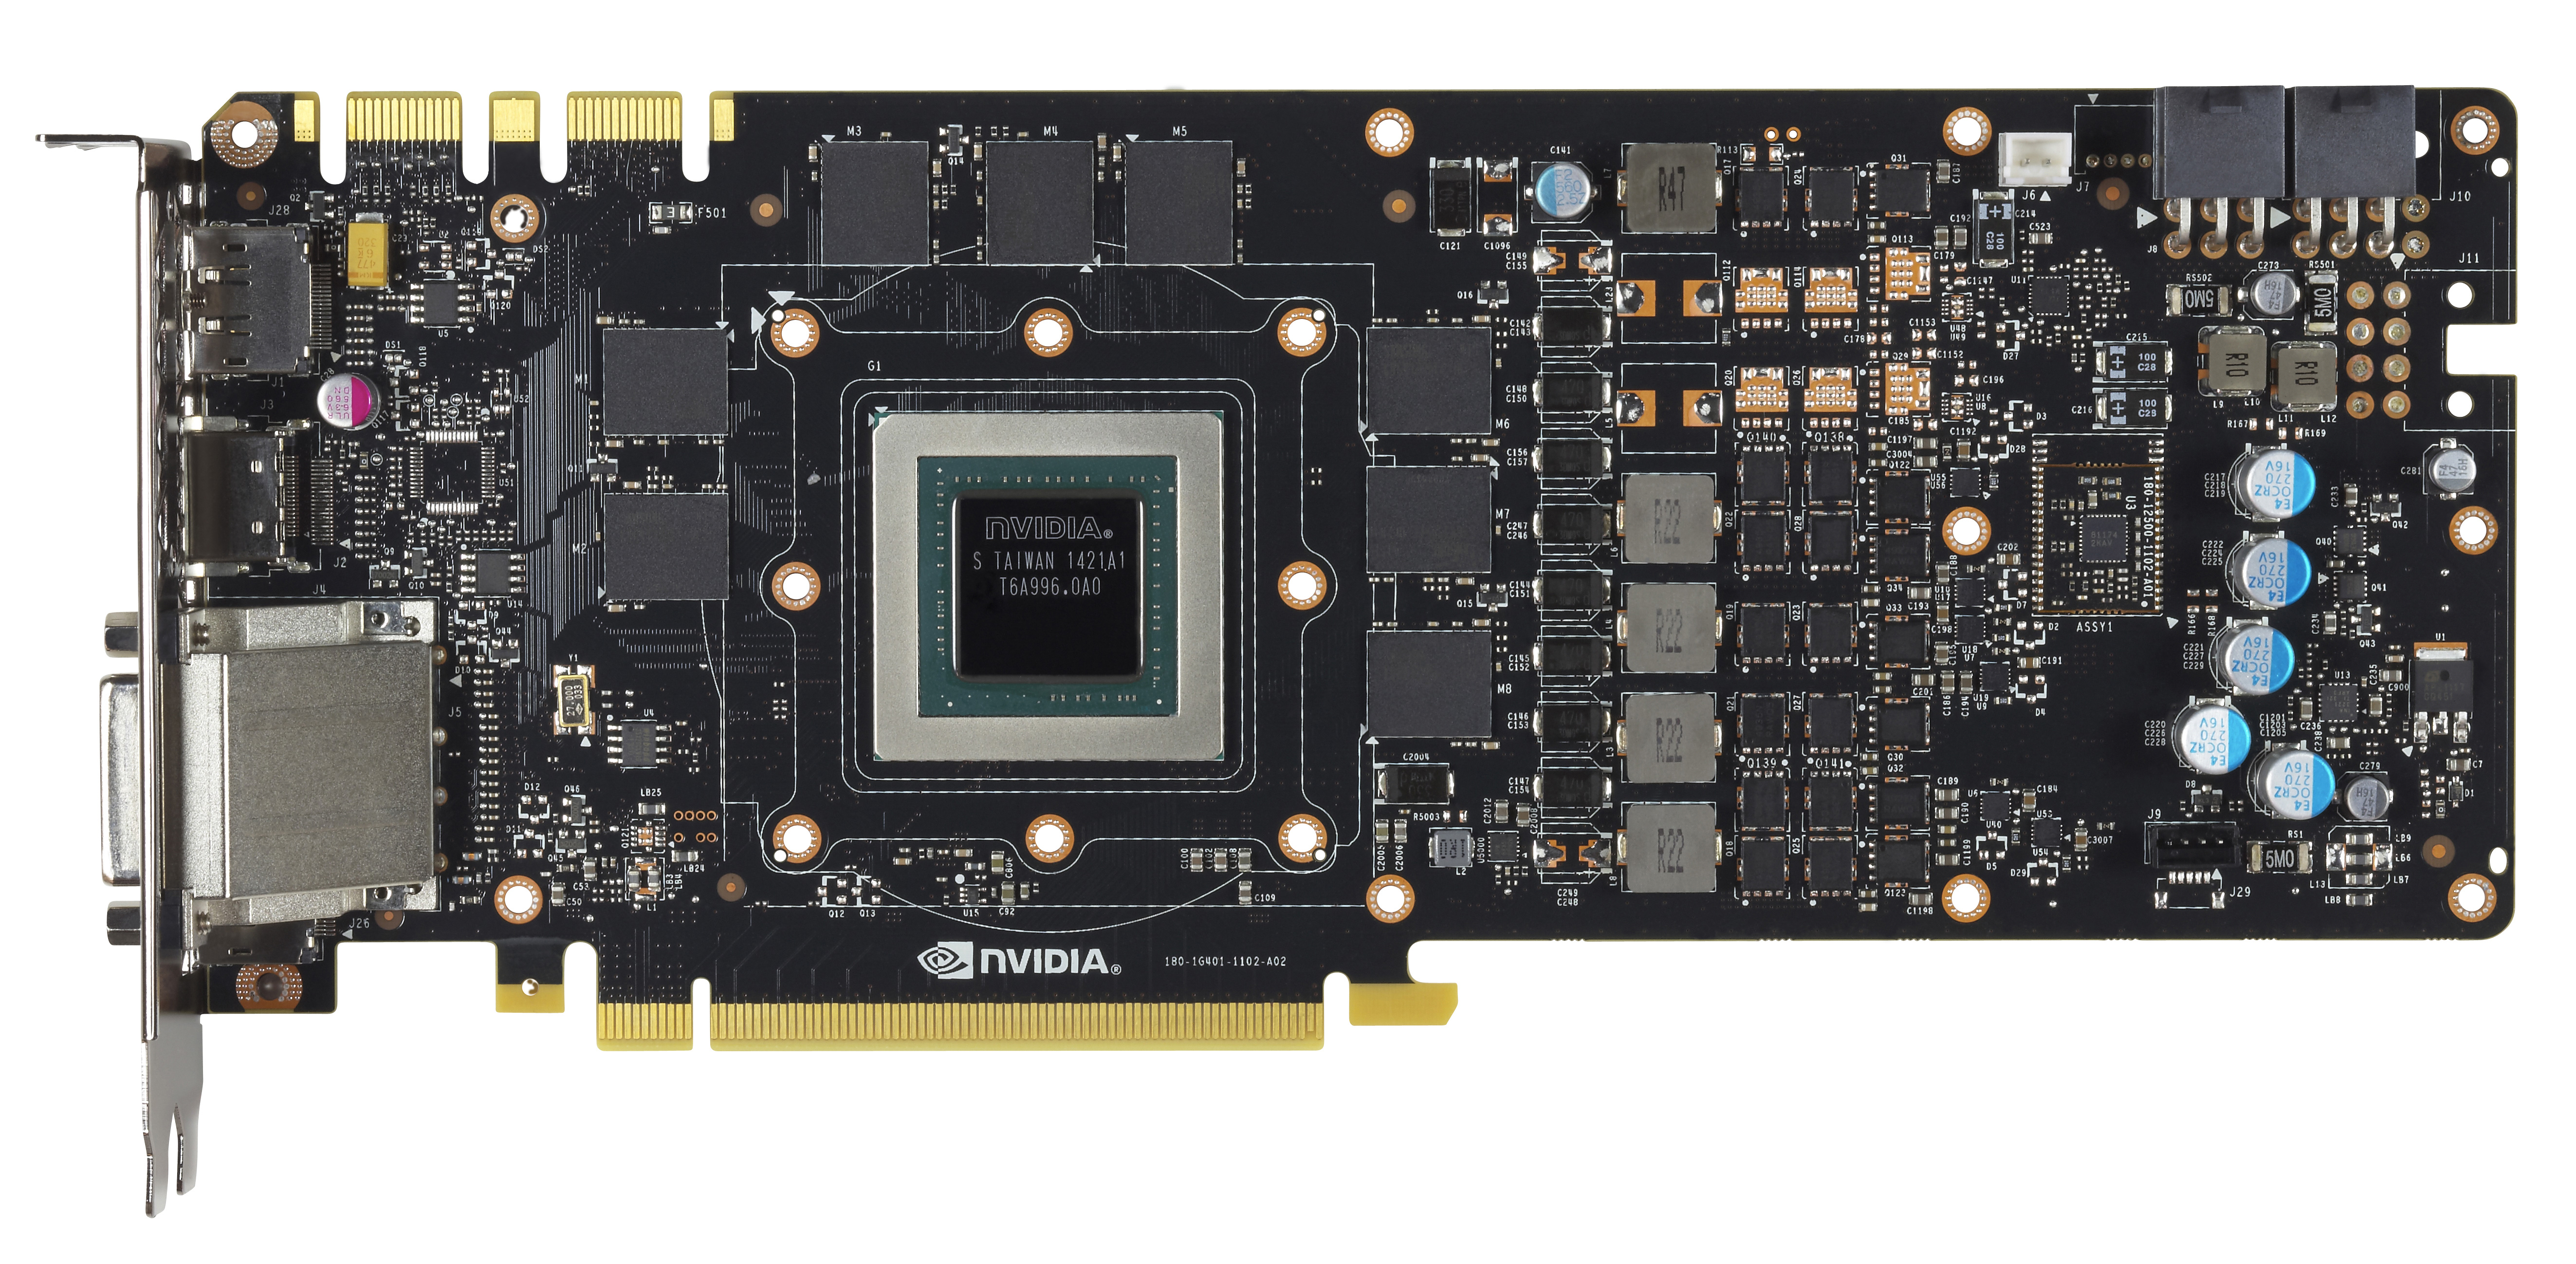 Meet The Geforce Gtx 980 The Nvidia Geforce Gtx 980 Review Maxwell Mark 2